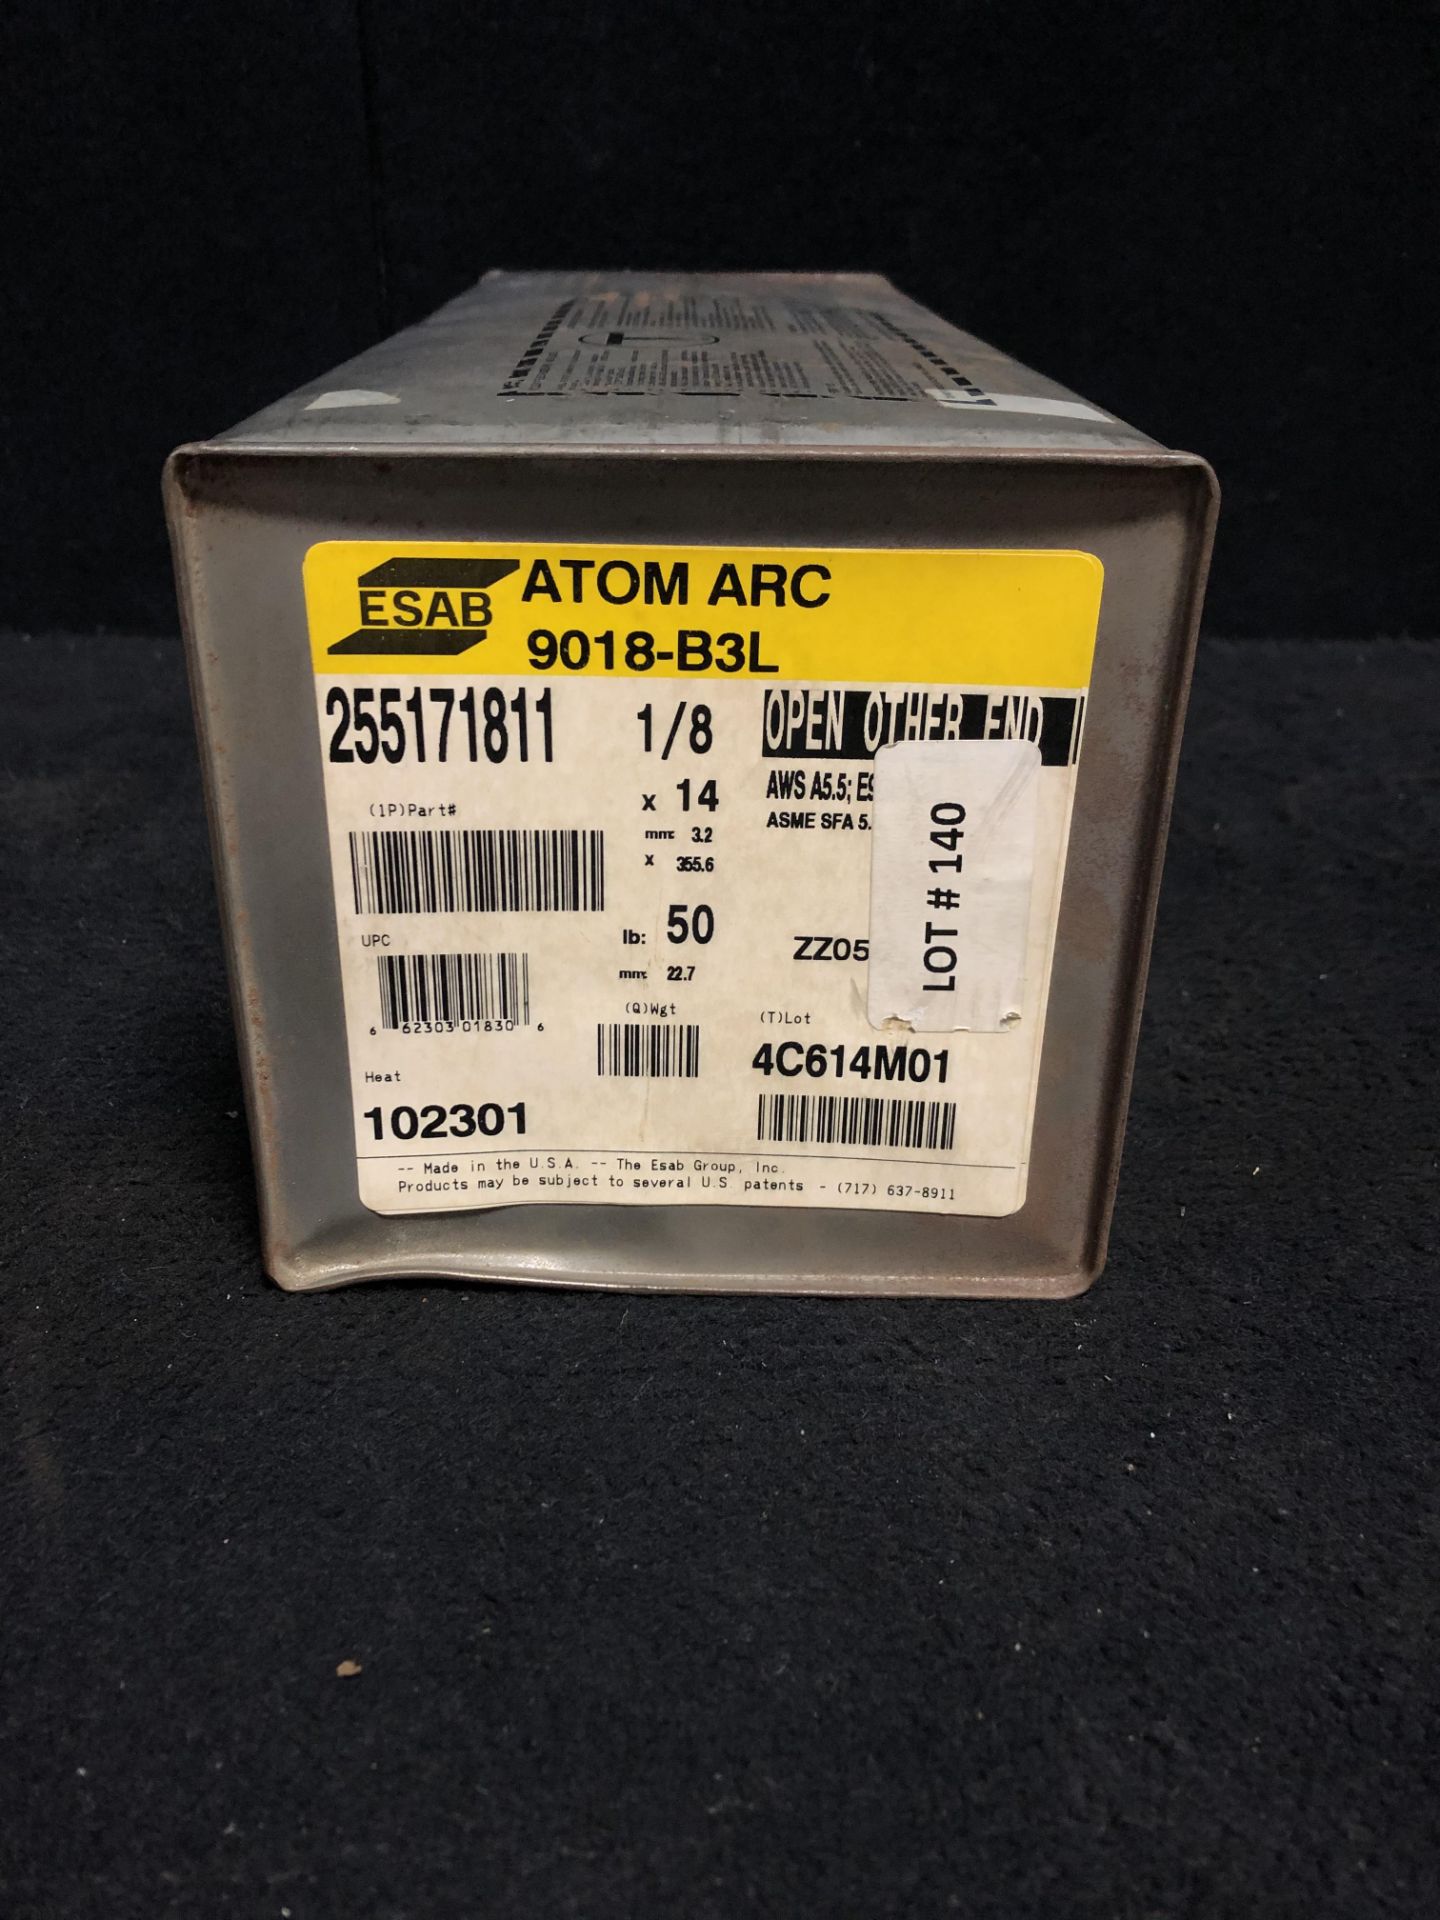 ESAB ATOM ARC 9018-B3L ELECTRODES, 3.2MM, 50LBS - Image 4 of 4